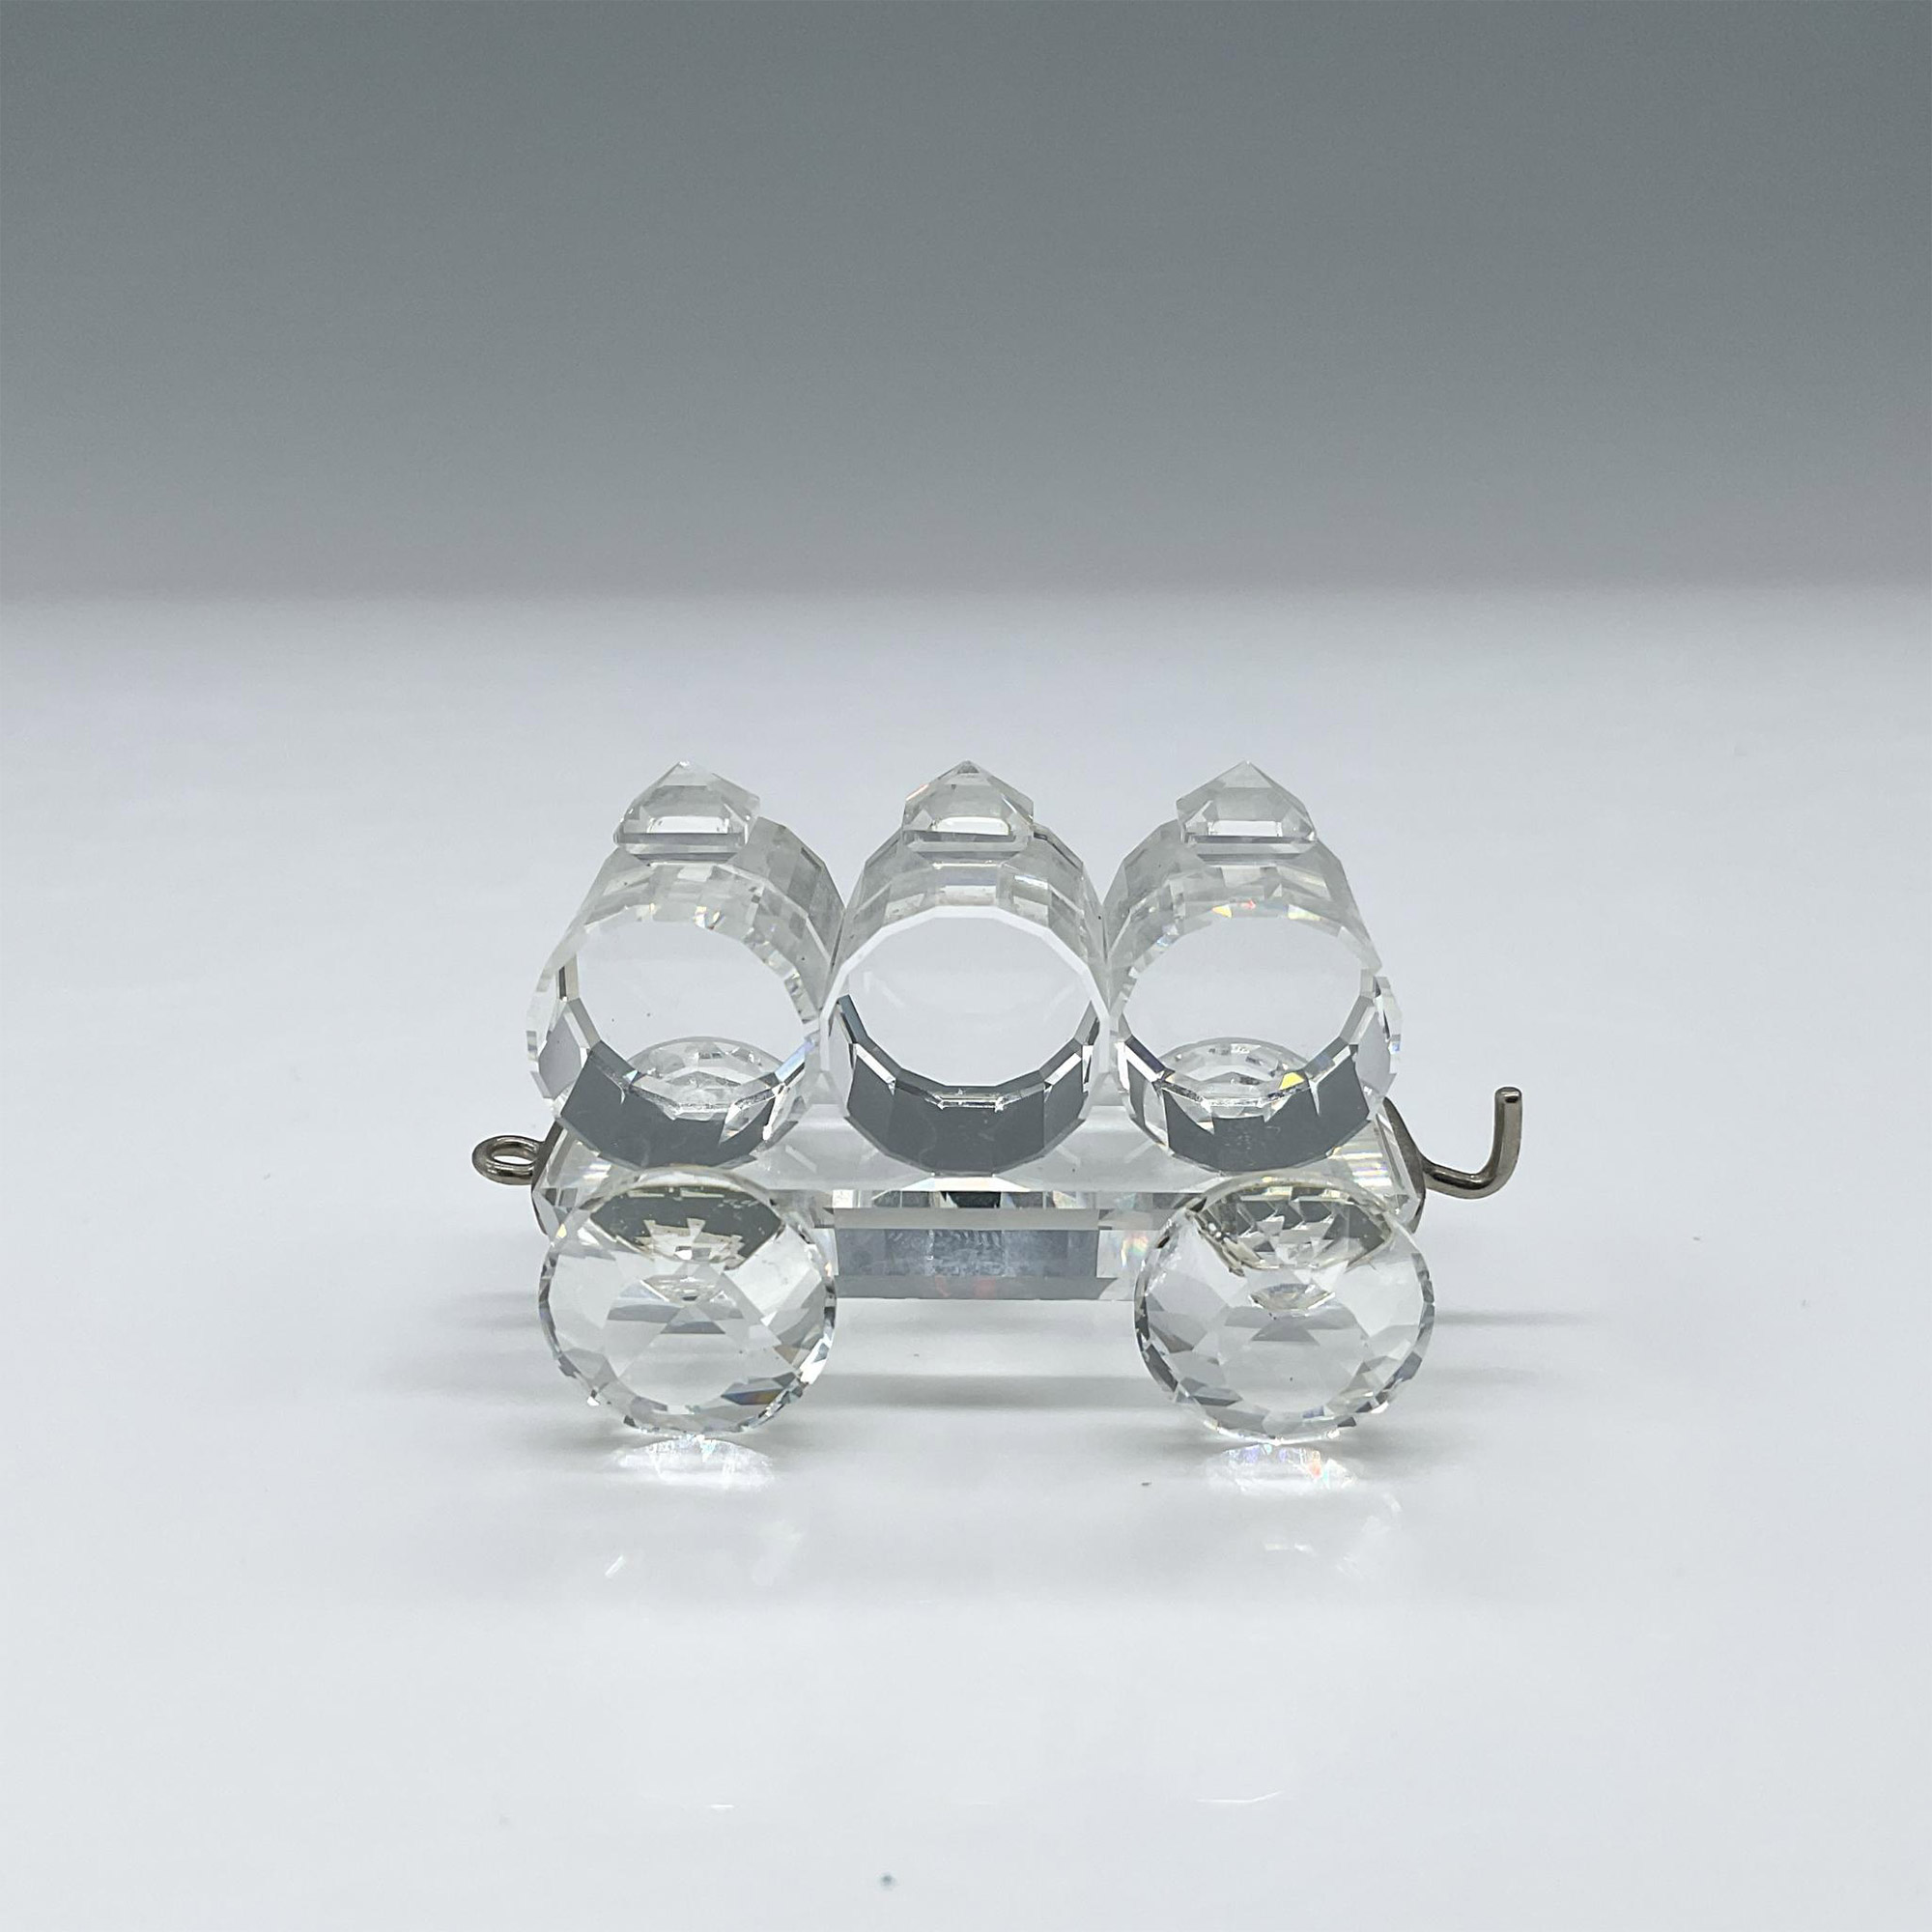 Swarovski Crystal Figurine, Petrol Wagon - Image 2 of 4